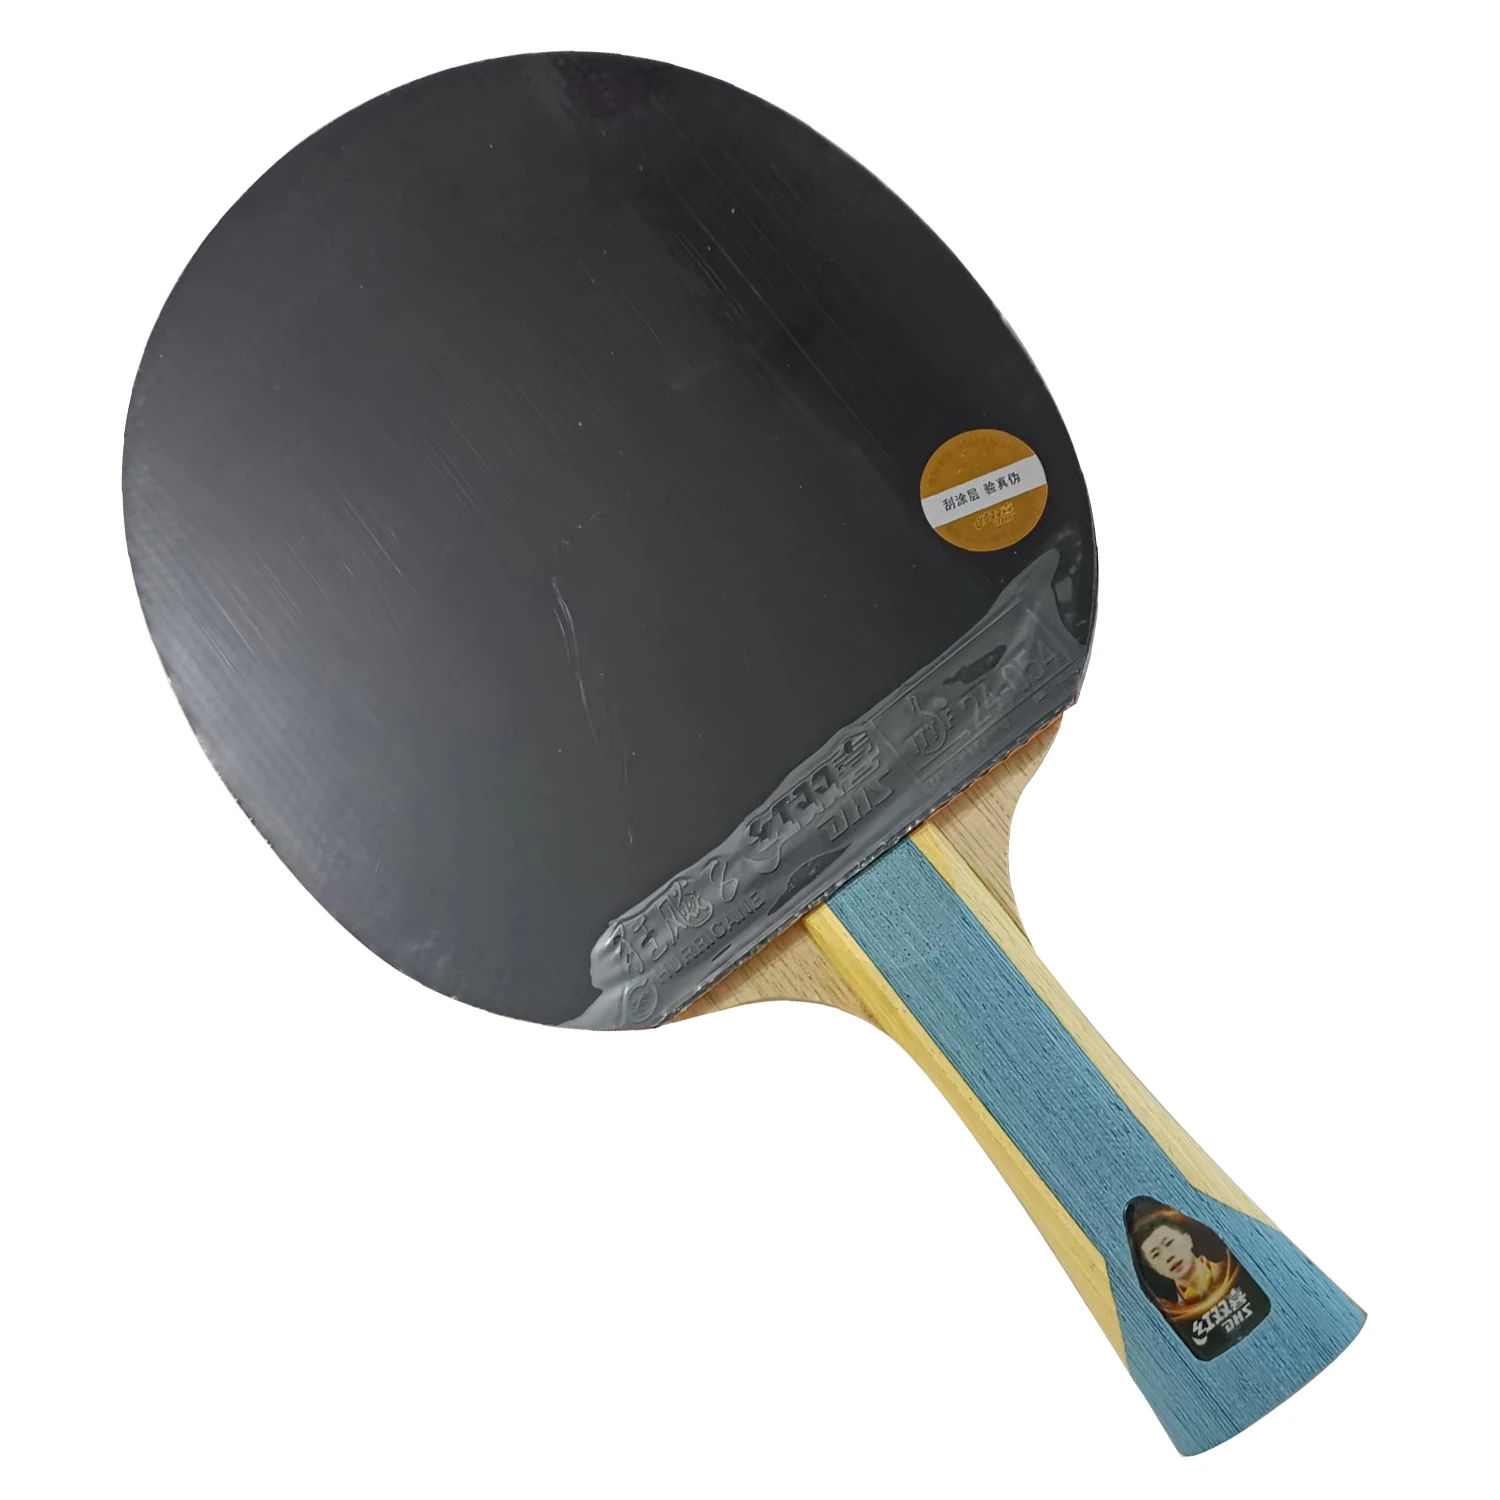 

Ракетка для настольного тенниса DHS 6002 6006 6 звезд Shakehand (Shakehand) с чехлом для пинг-понга